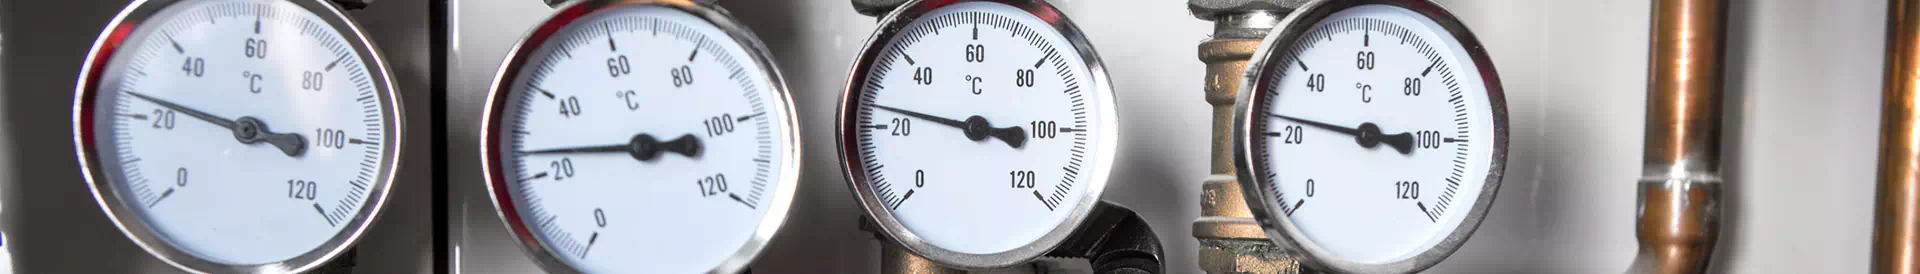 zegary pomiarowe temperatury